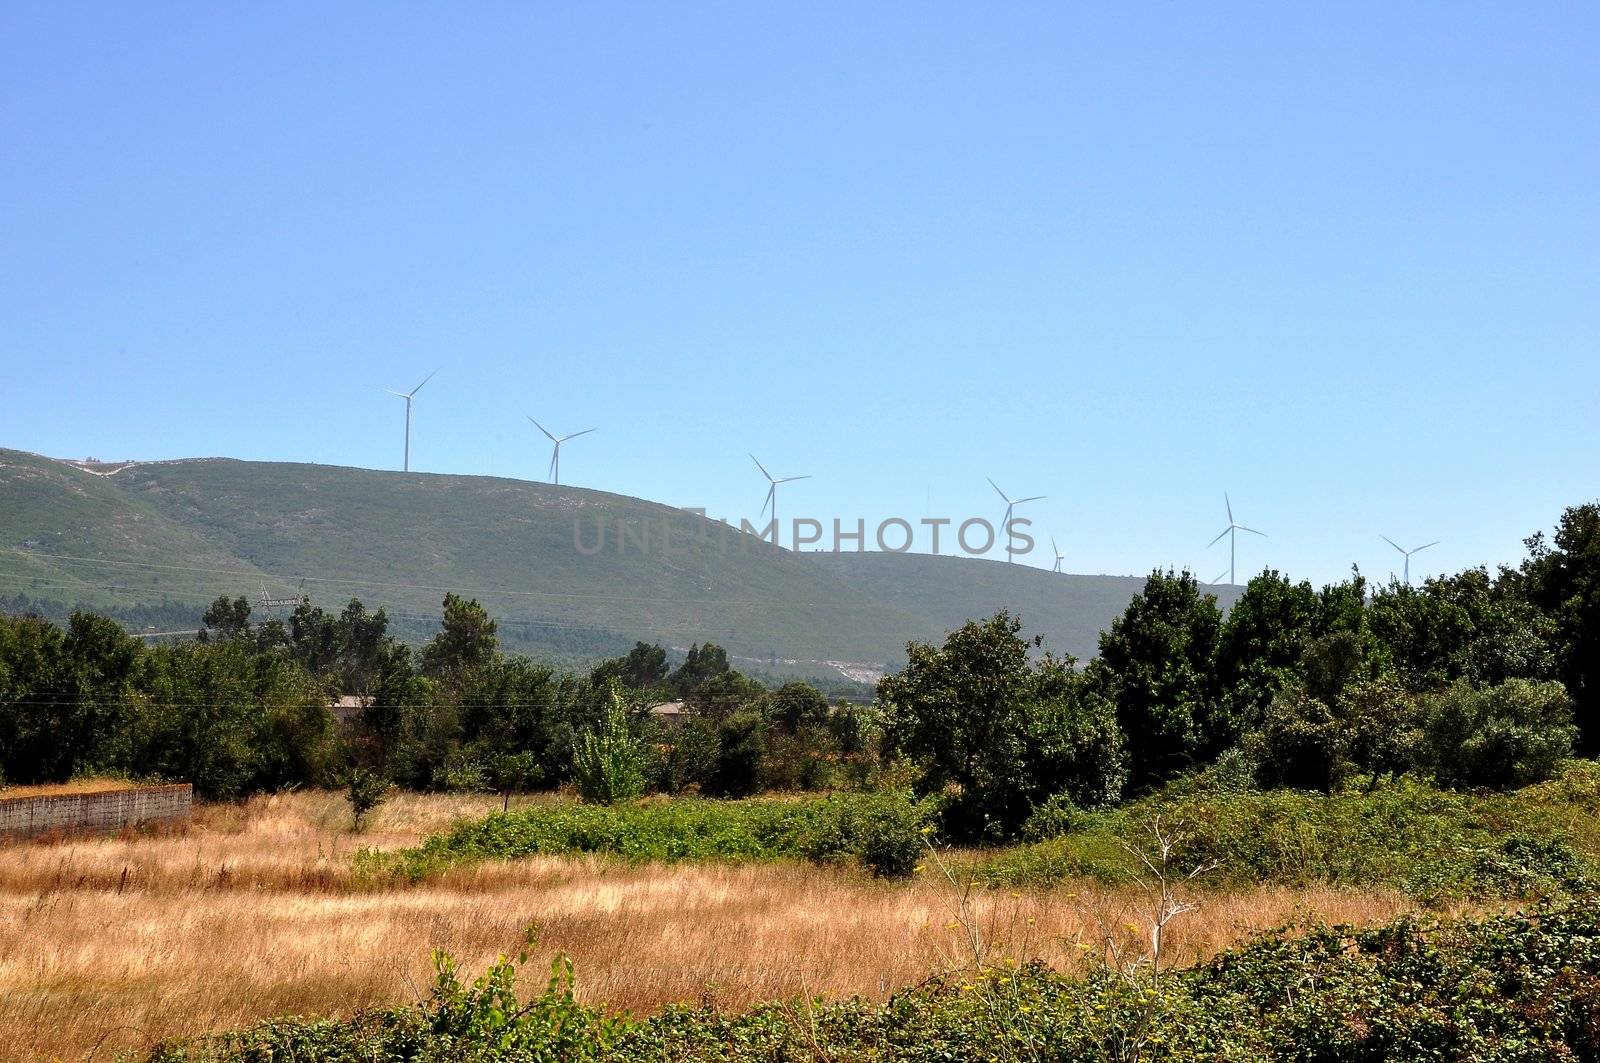 Landscape with wind power generators